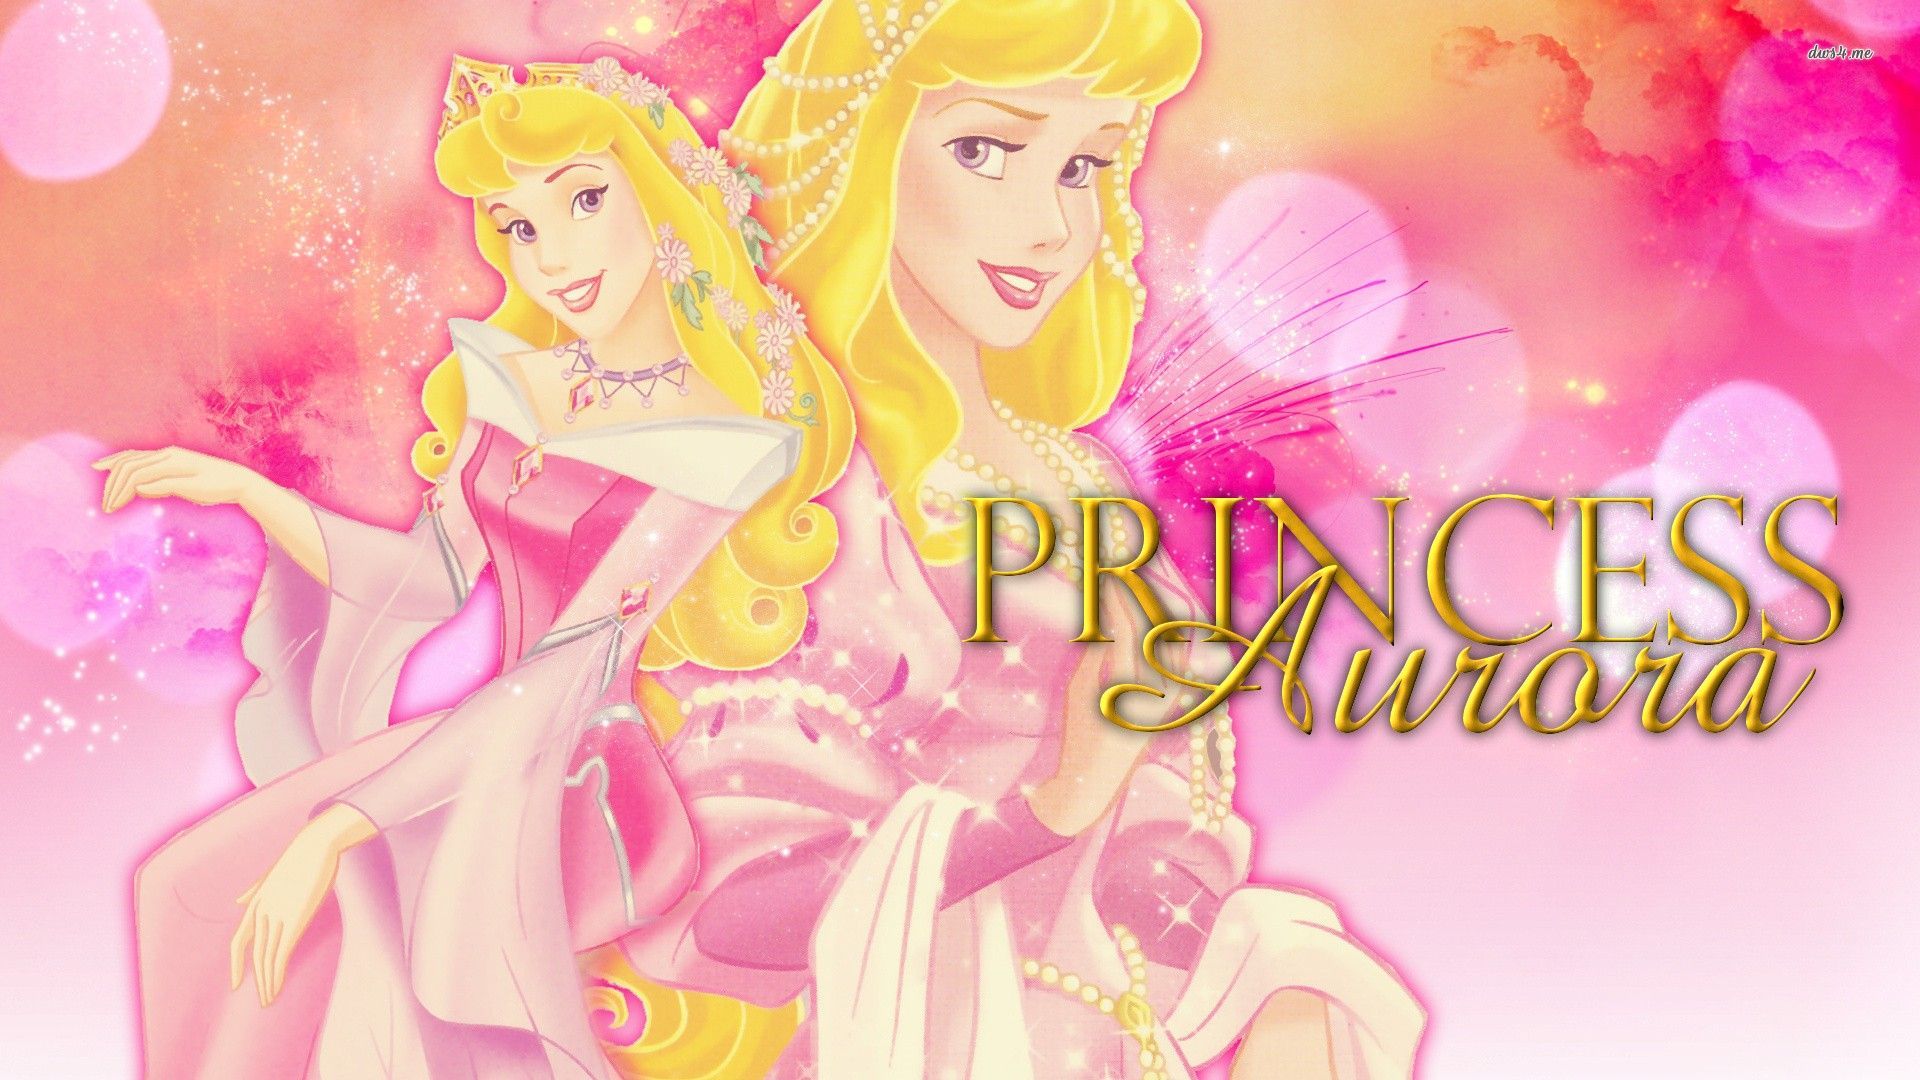 ✿ Aurora ✿. Disney princess aurora, Disney princess wallpaper, Princess aurora